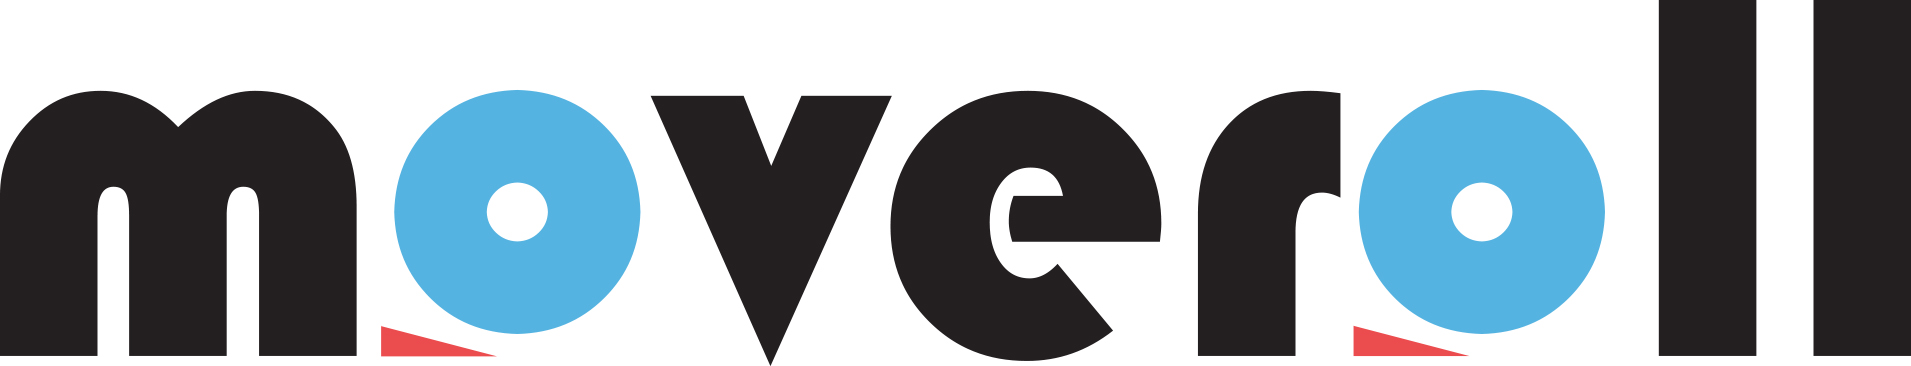 Moveroll logo 